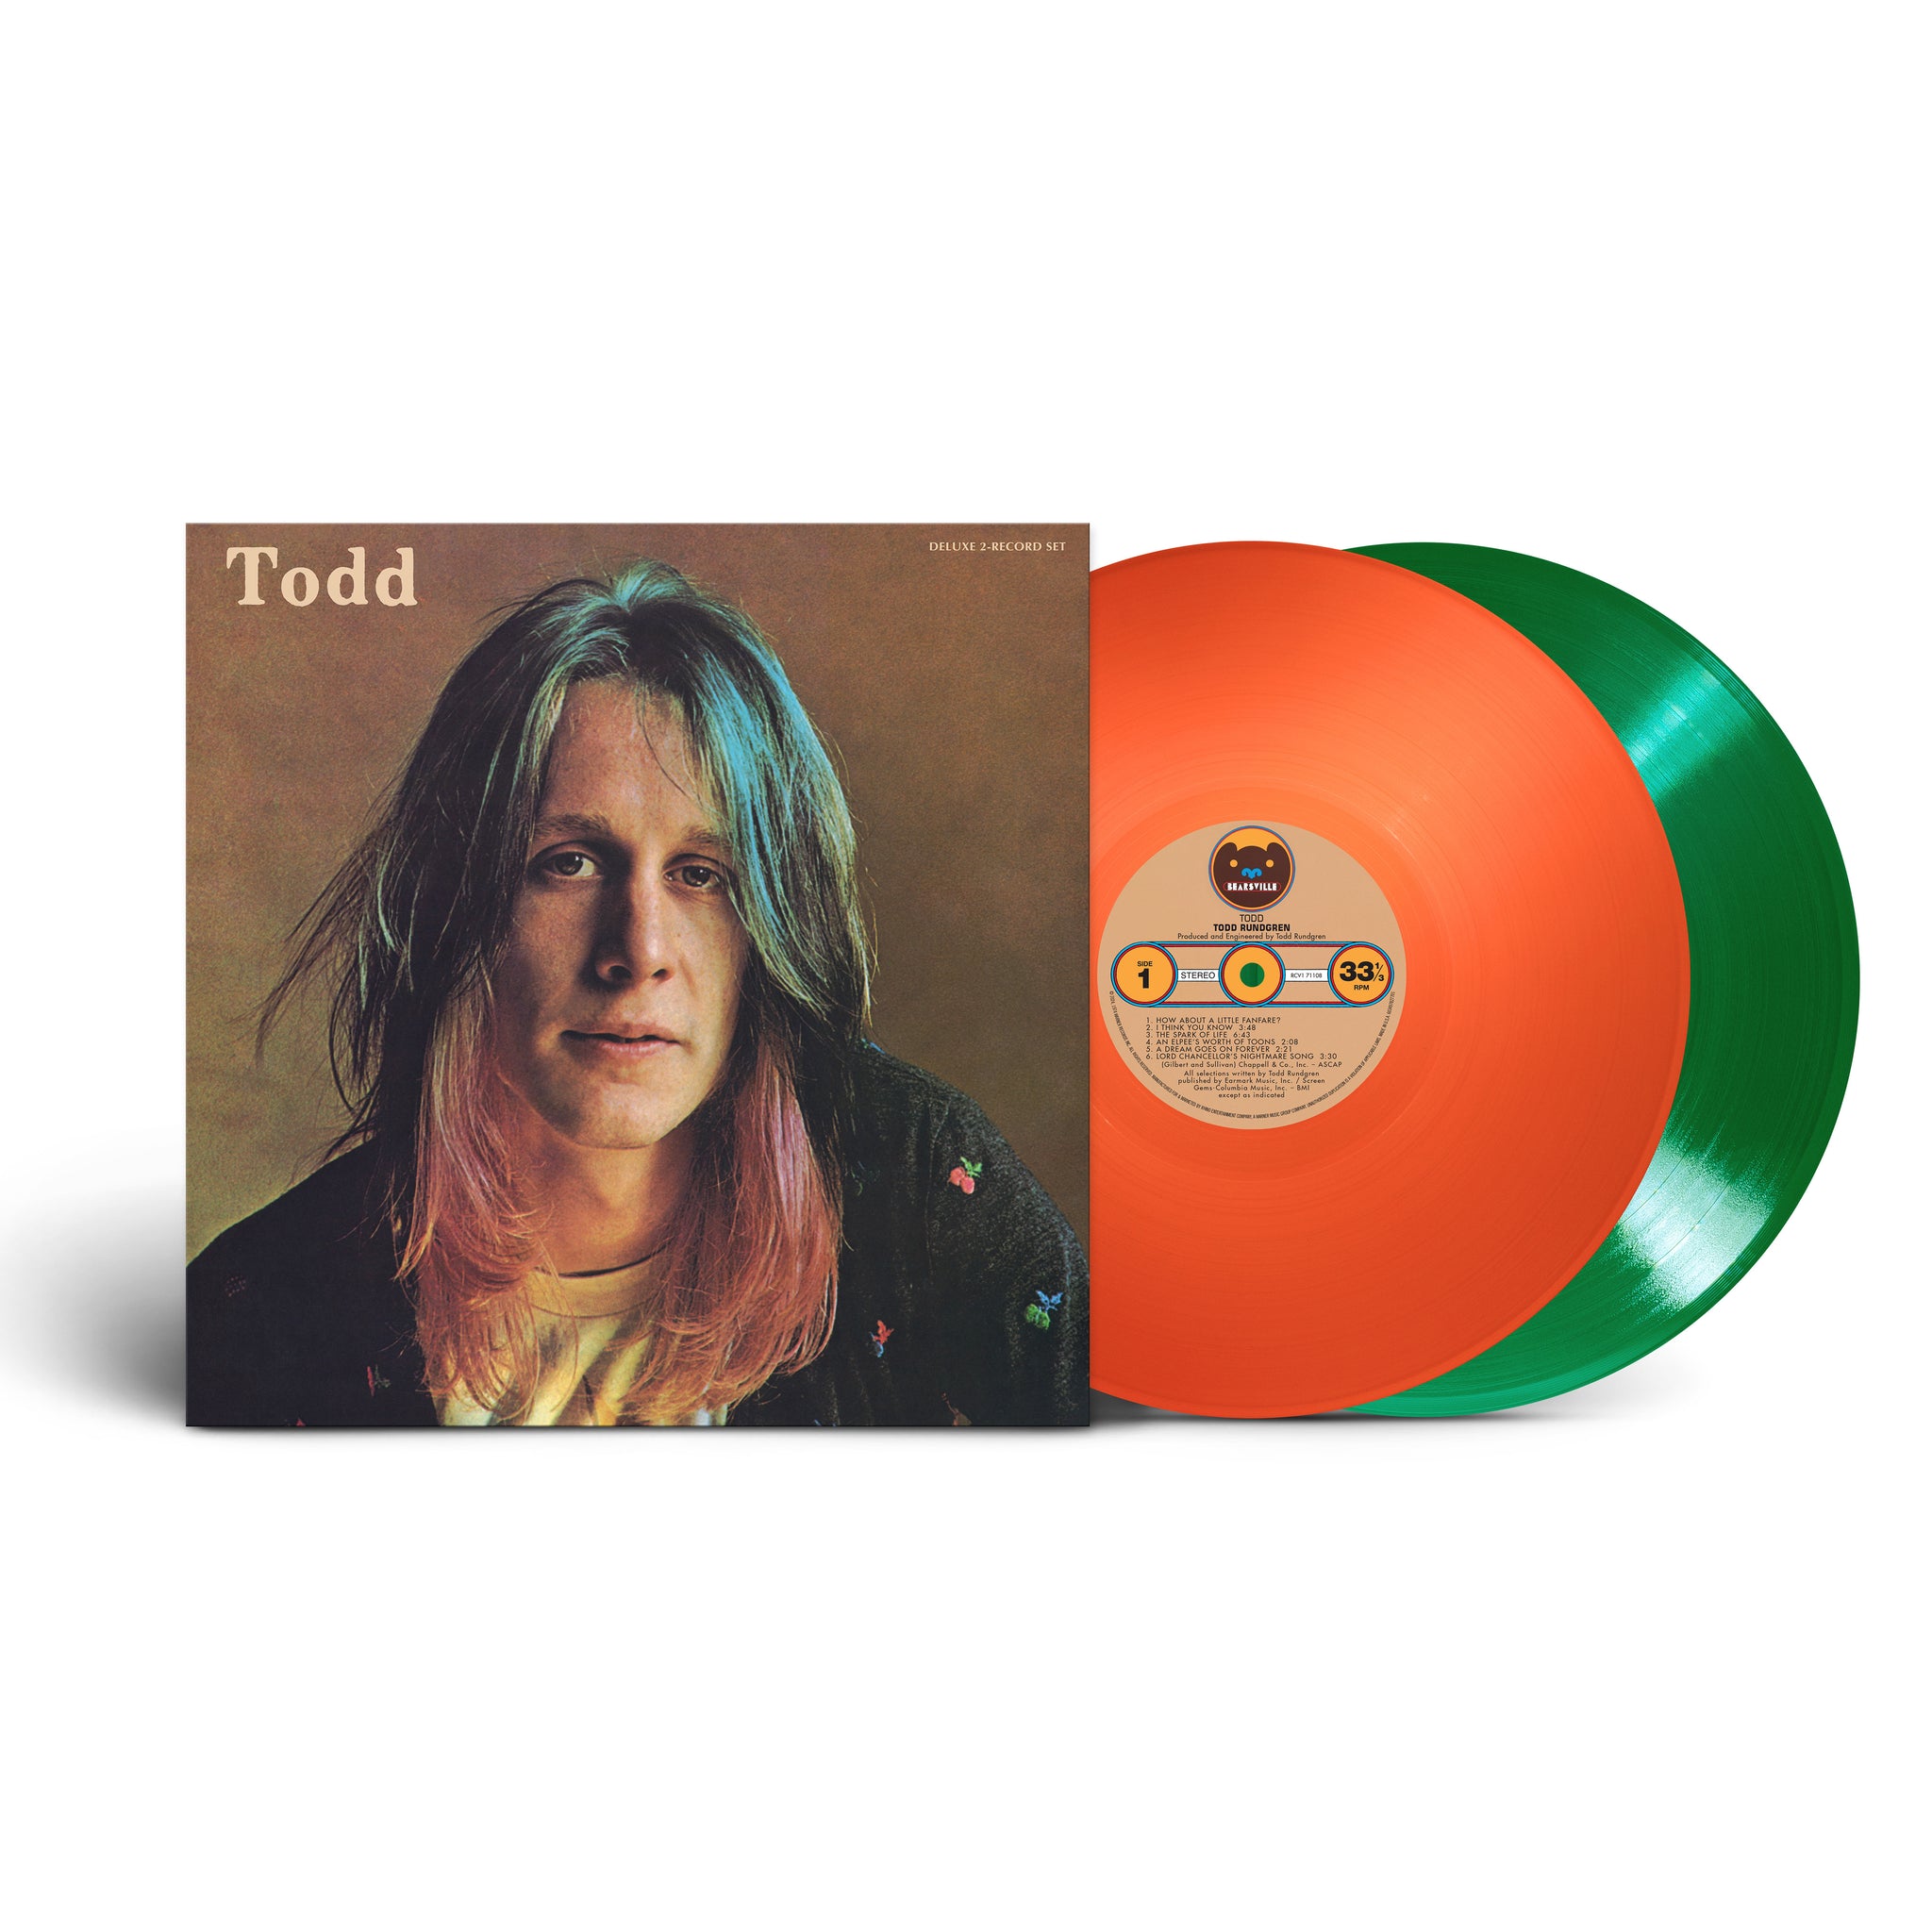 TODD RUNDGREN - Todd - 2 LP - Orange and Green Vinyls  [RSD 2024]